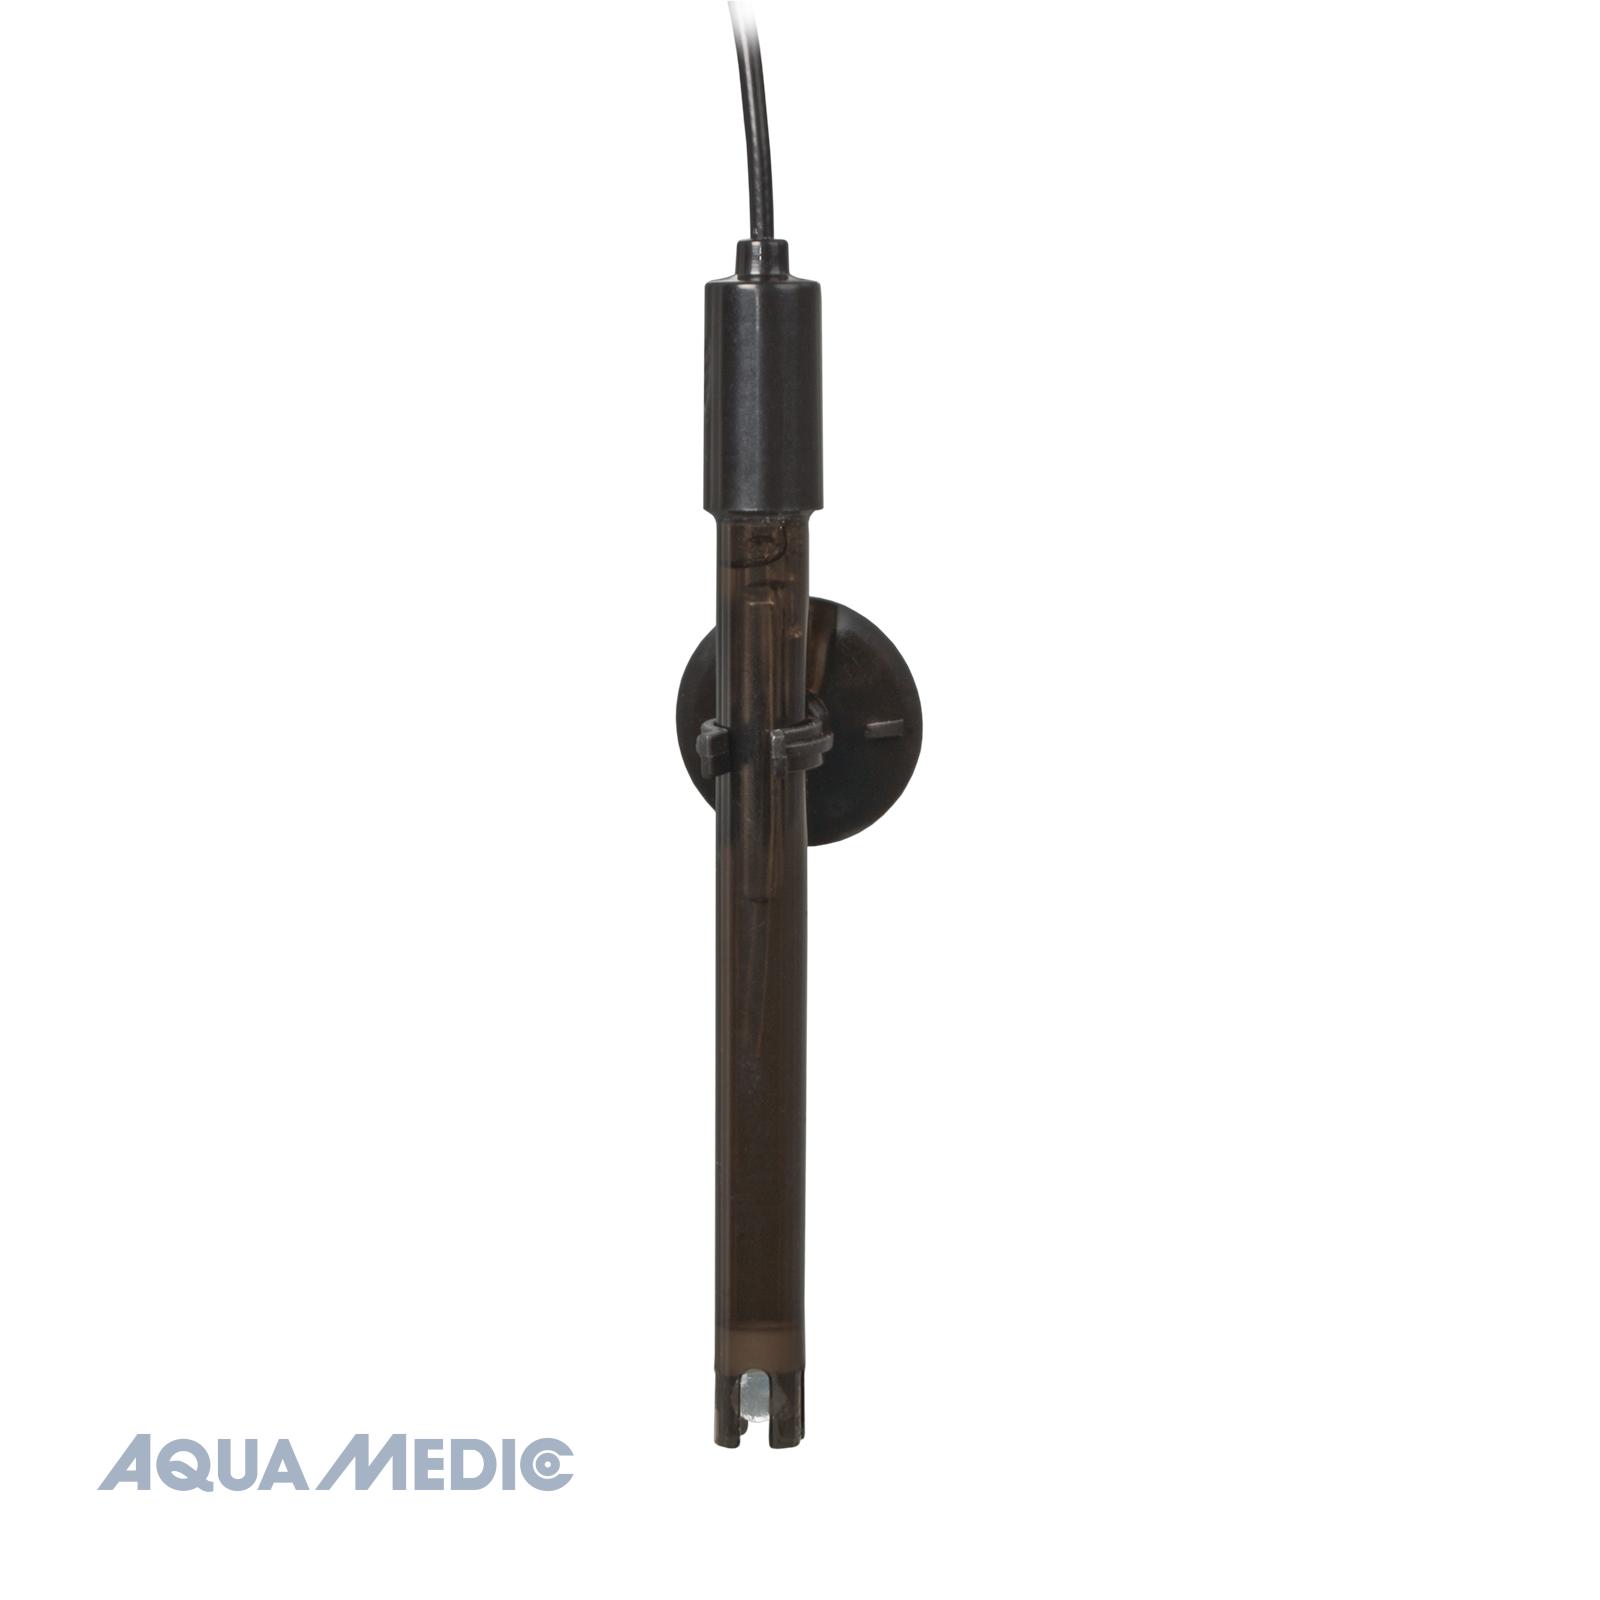 Aqua Medic PH monitor handleiding